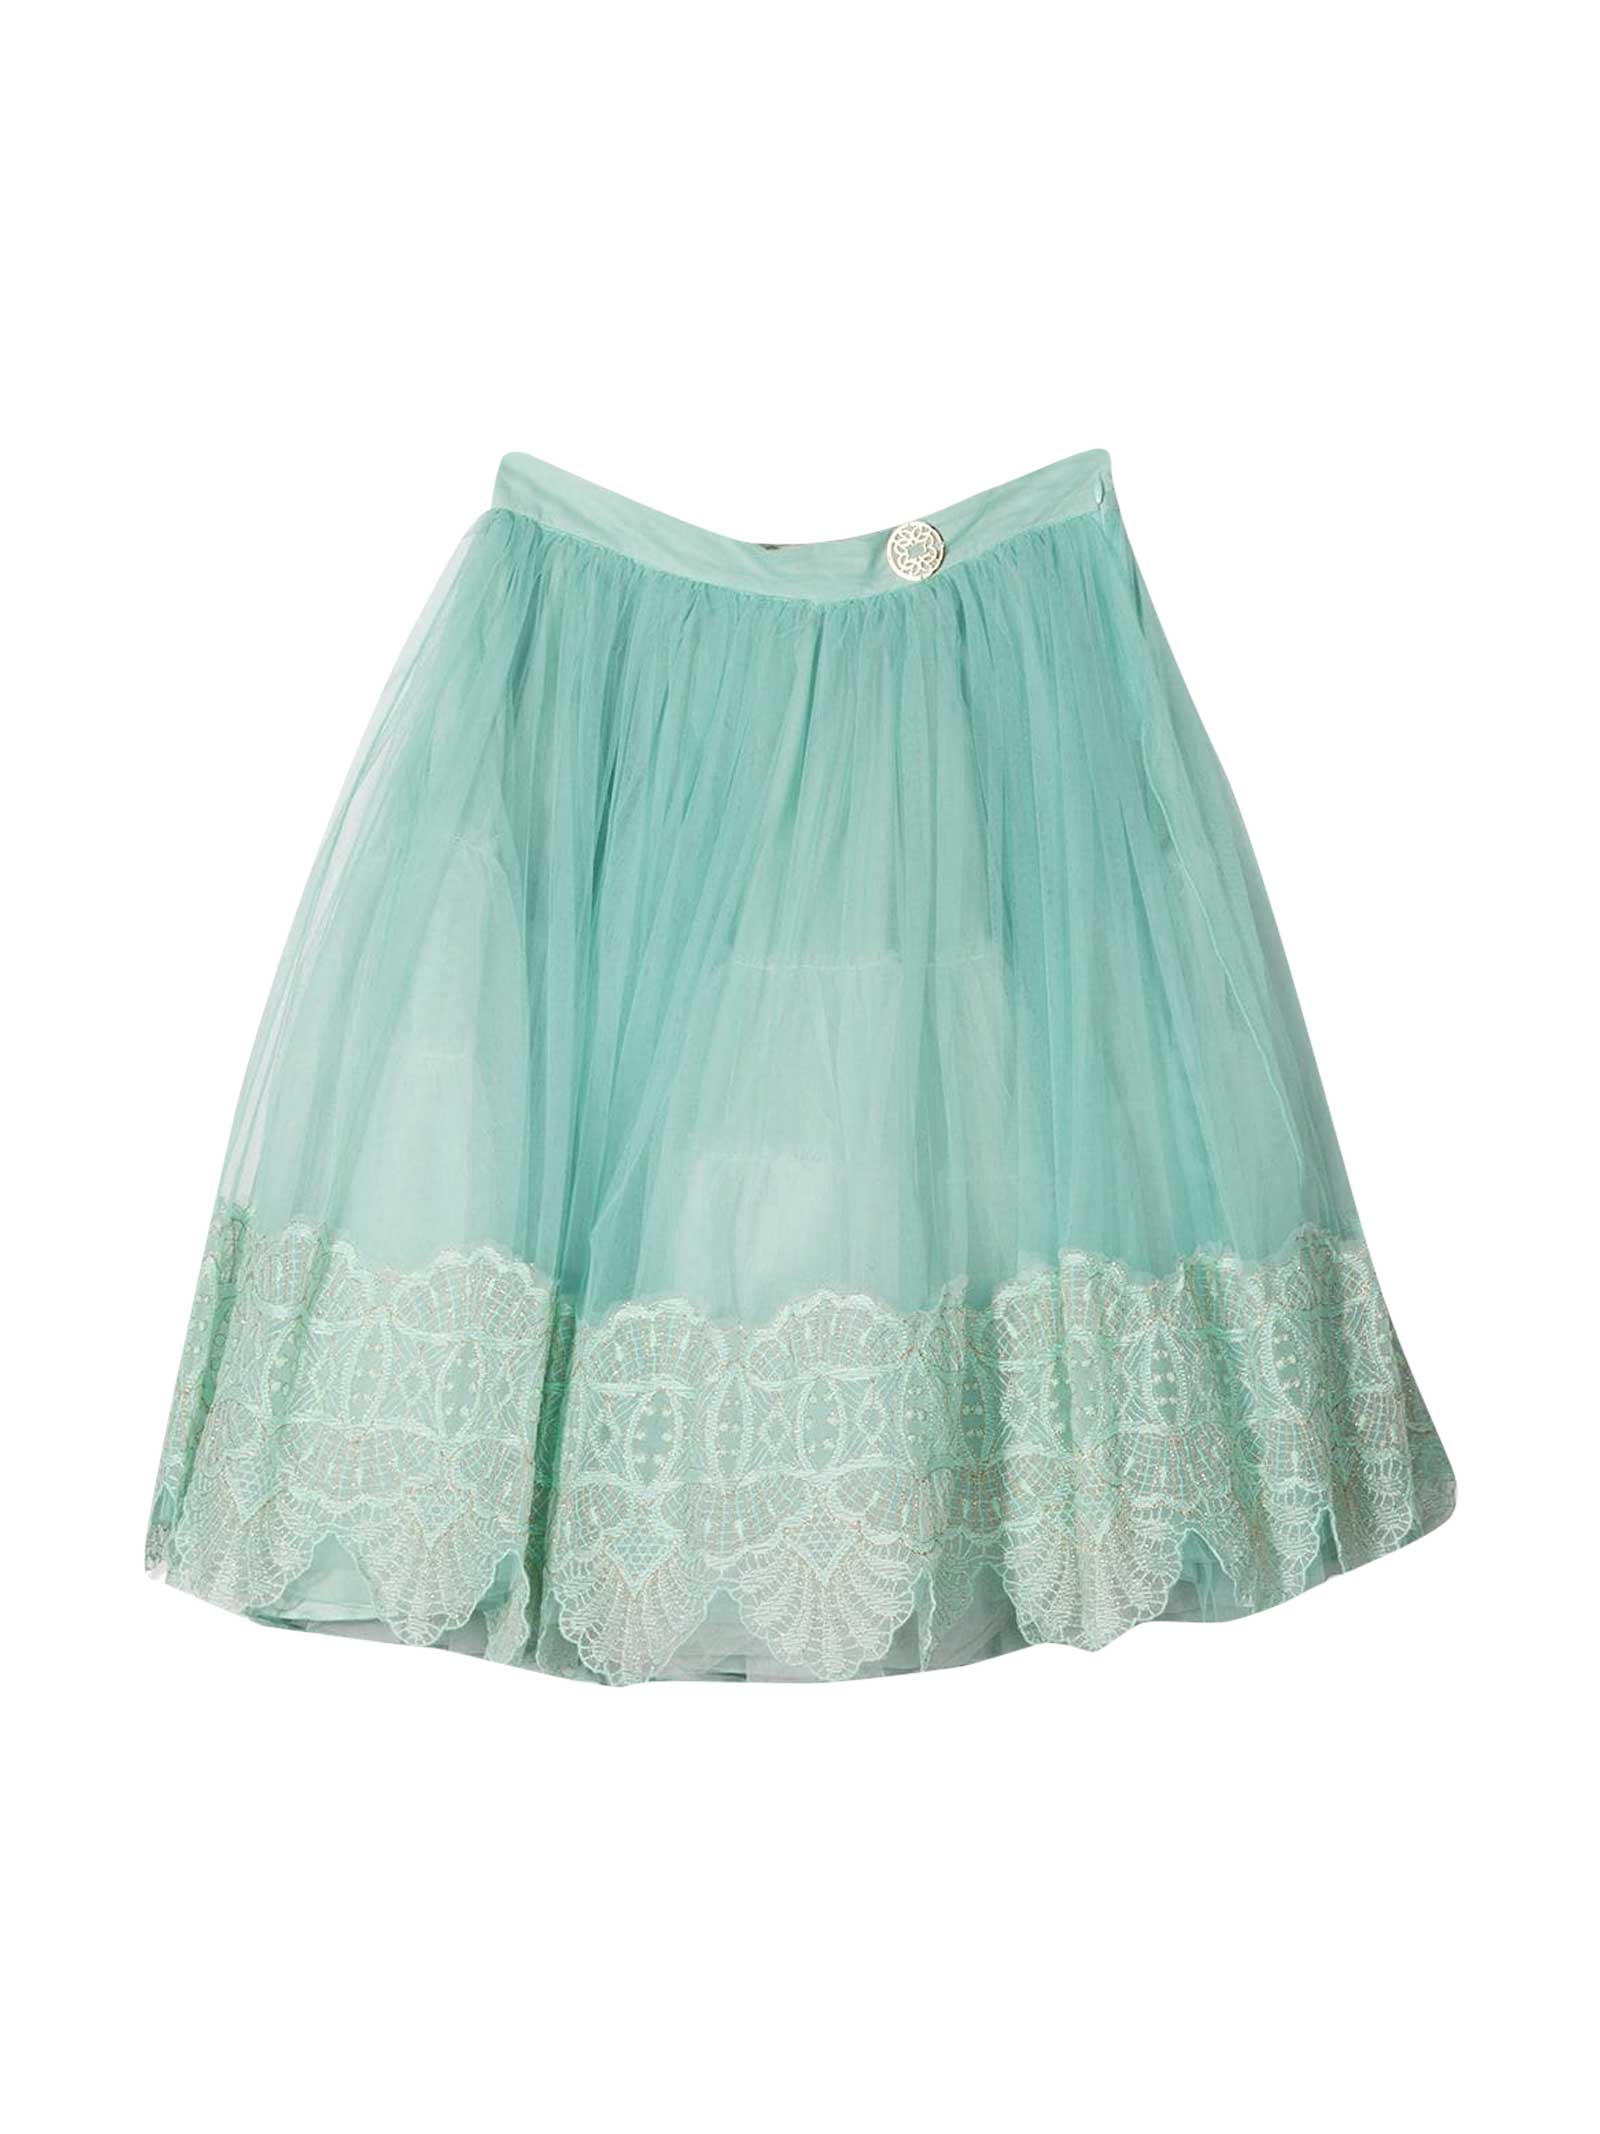 Elie Saab Skirt With Application